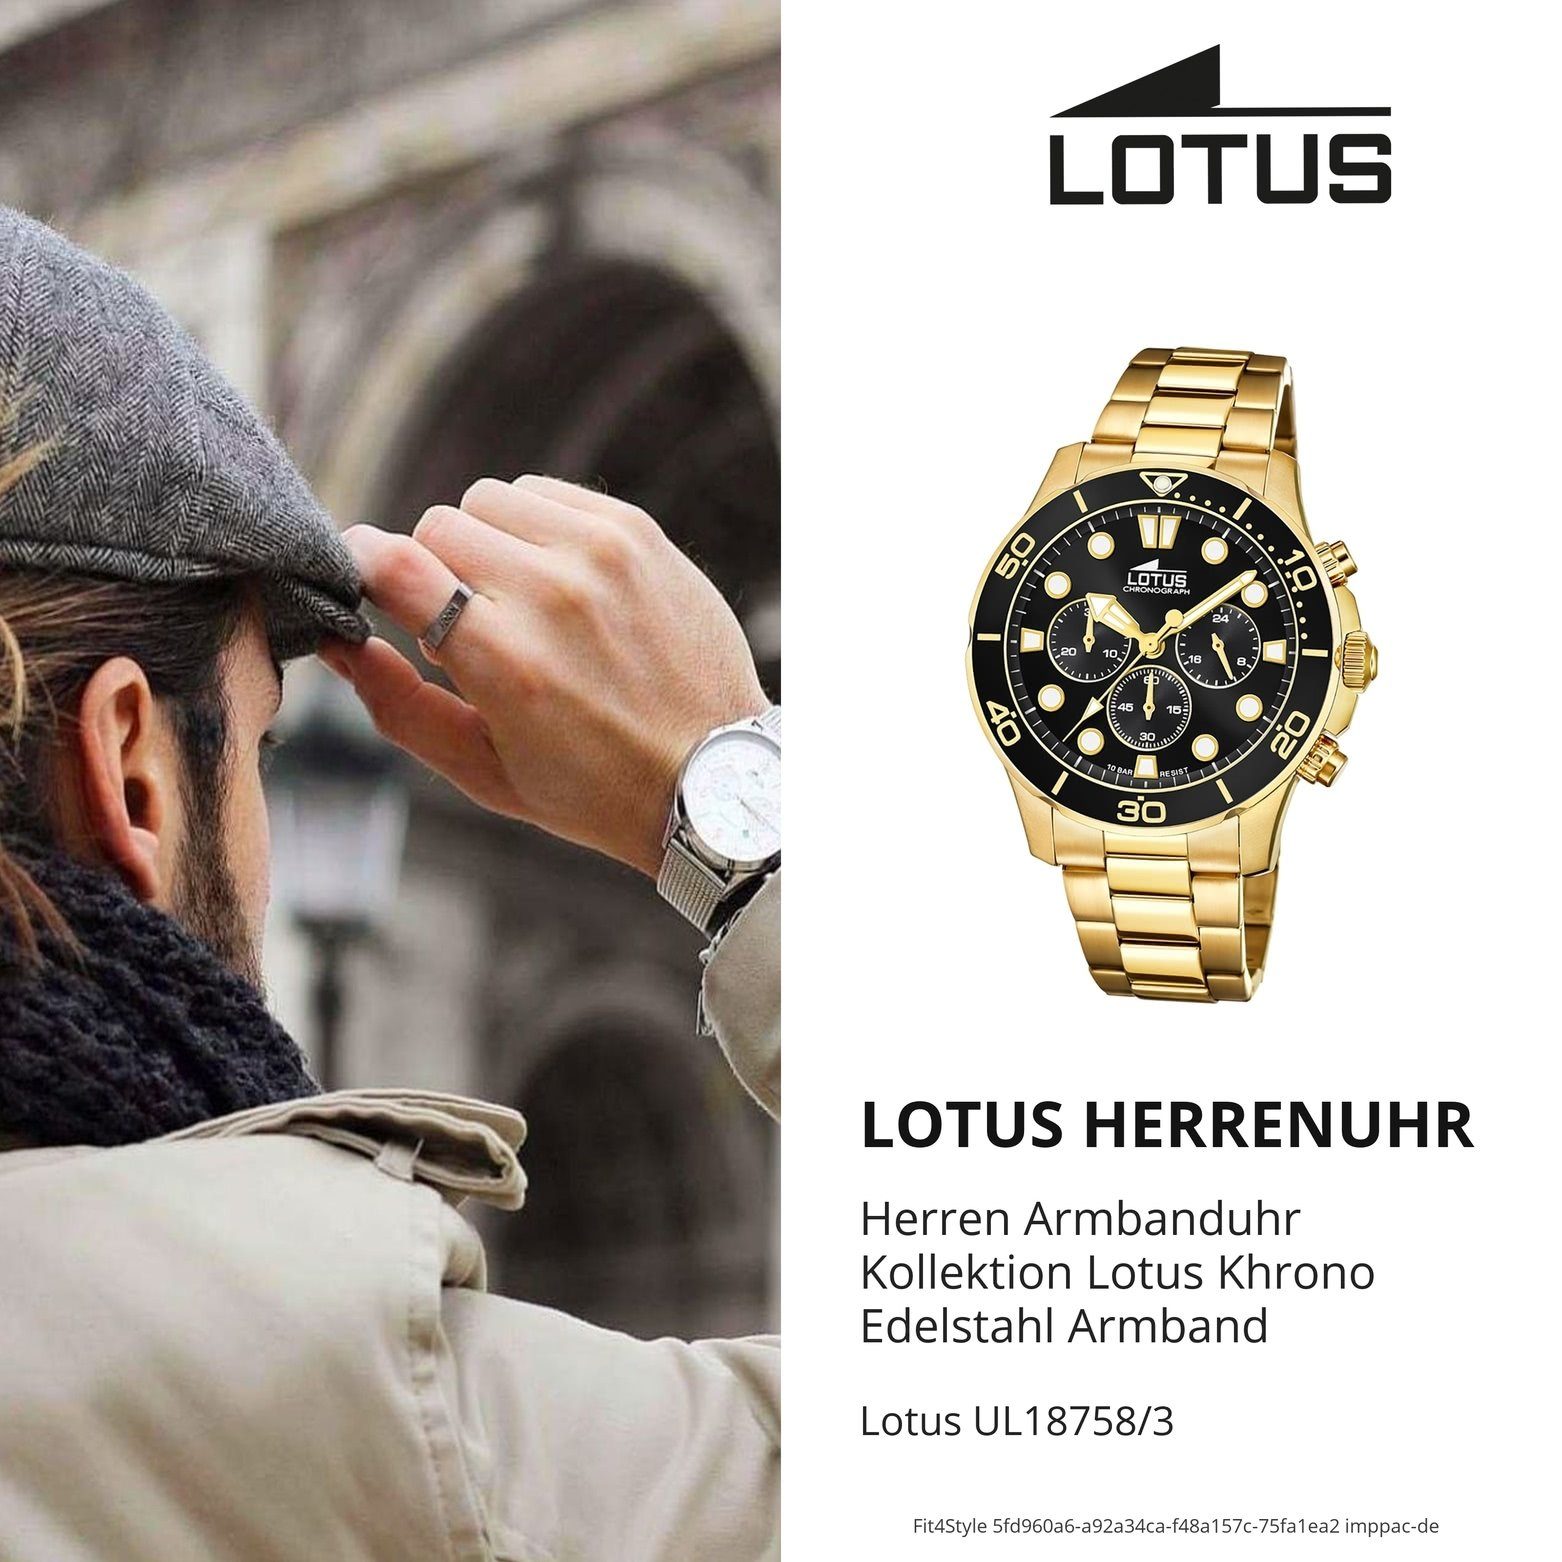 Lotus Lotus Edelstahlarmband, Herrenuhr Herren 18758/3, (ca. Krohno Fashion-Style Edelstahl, 45mm), rund, Chronograph Armbanduhr